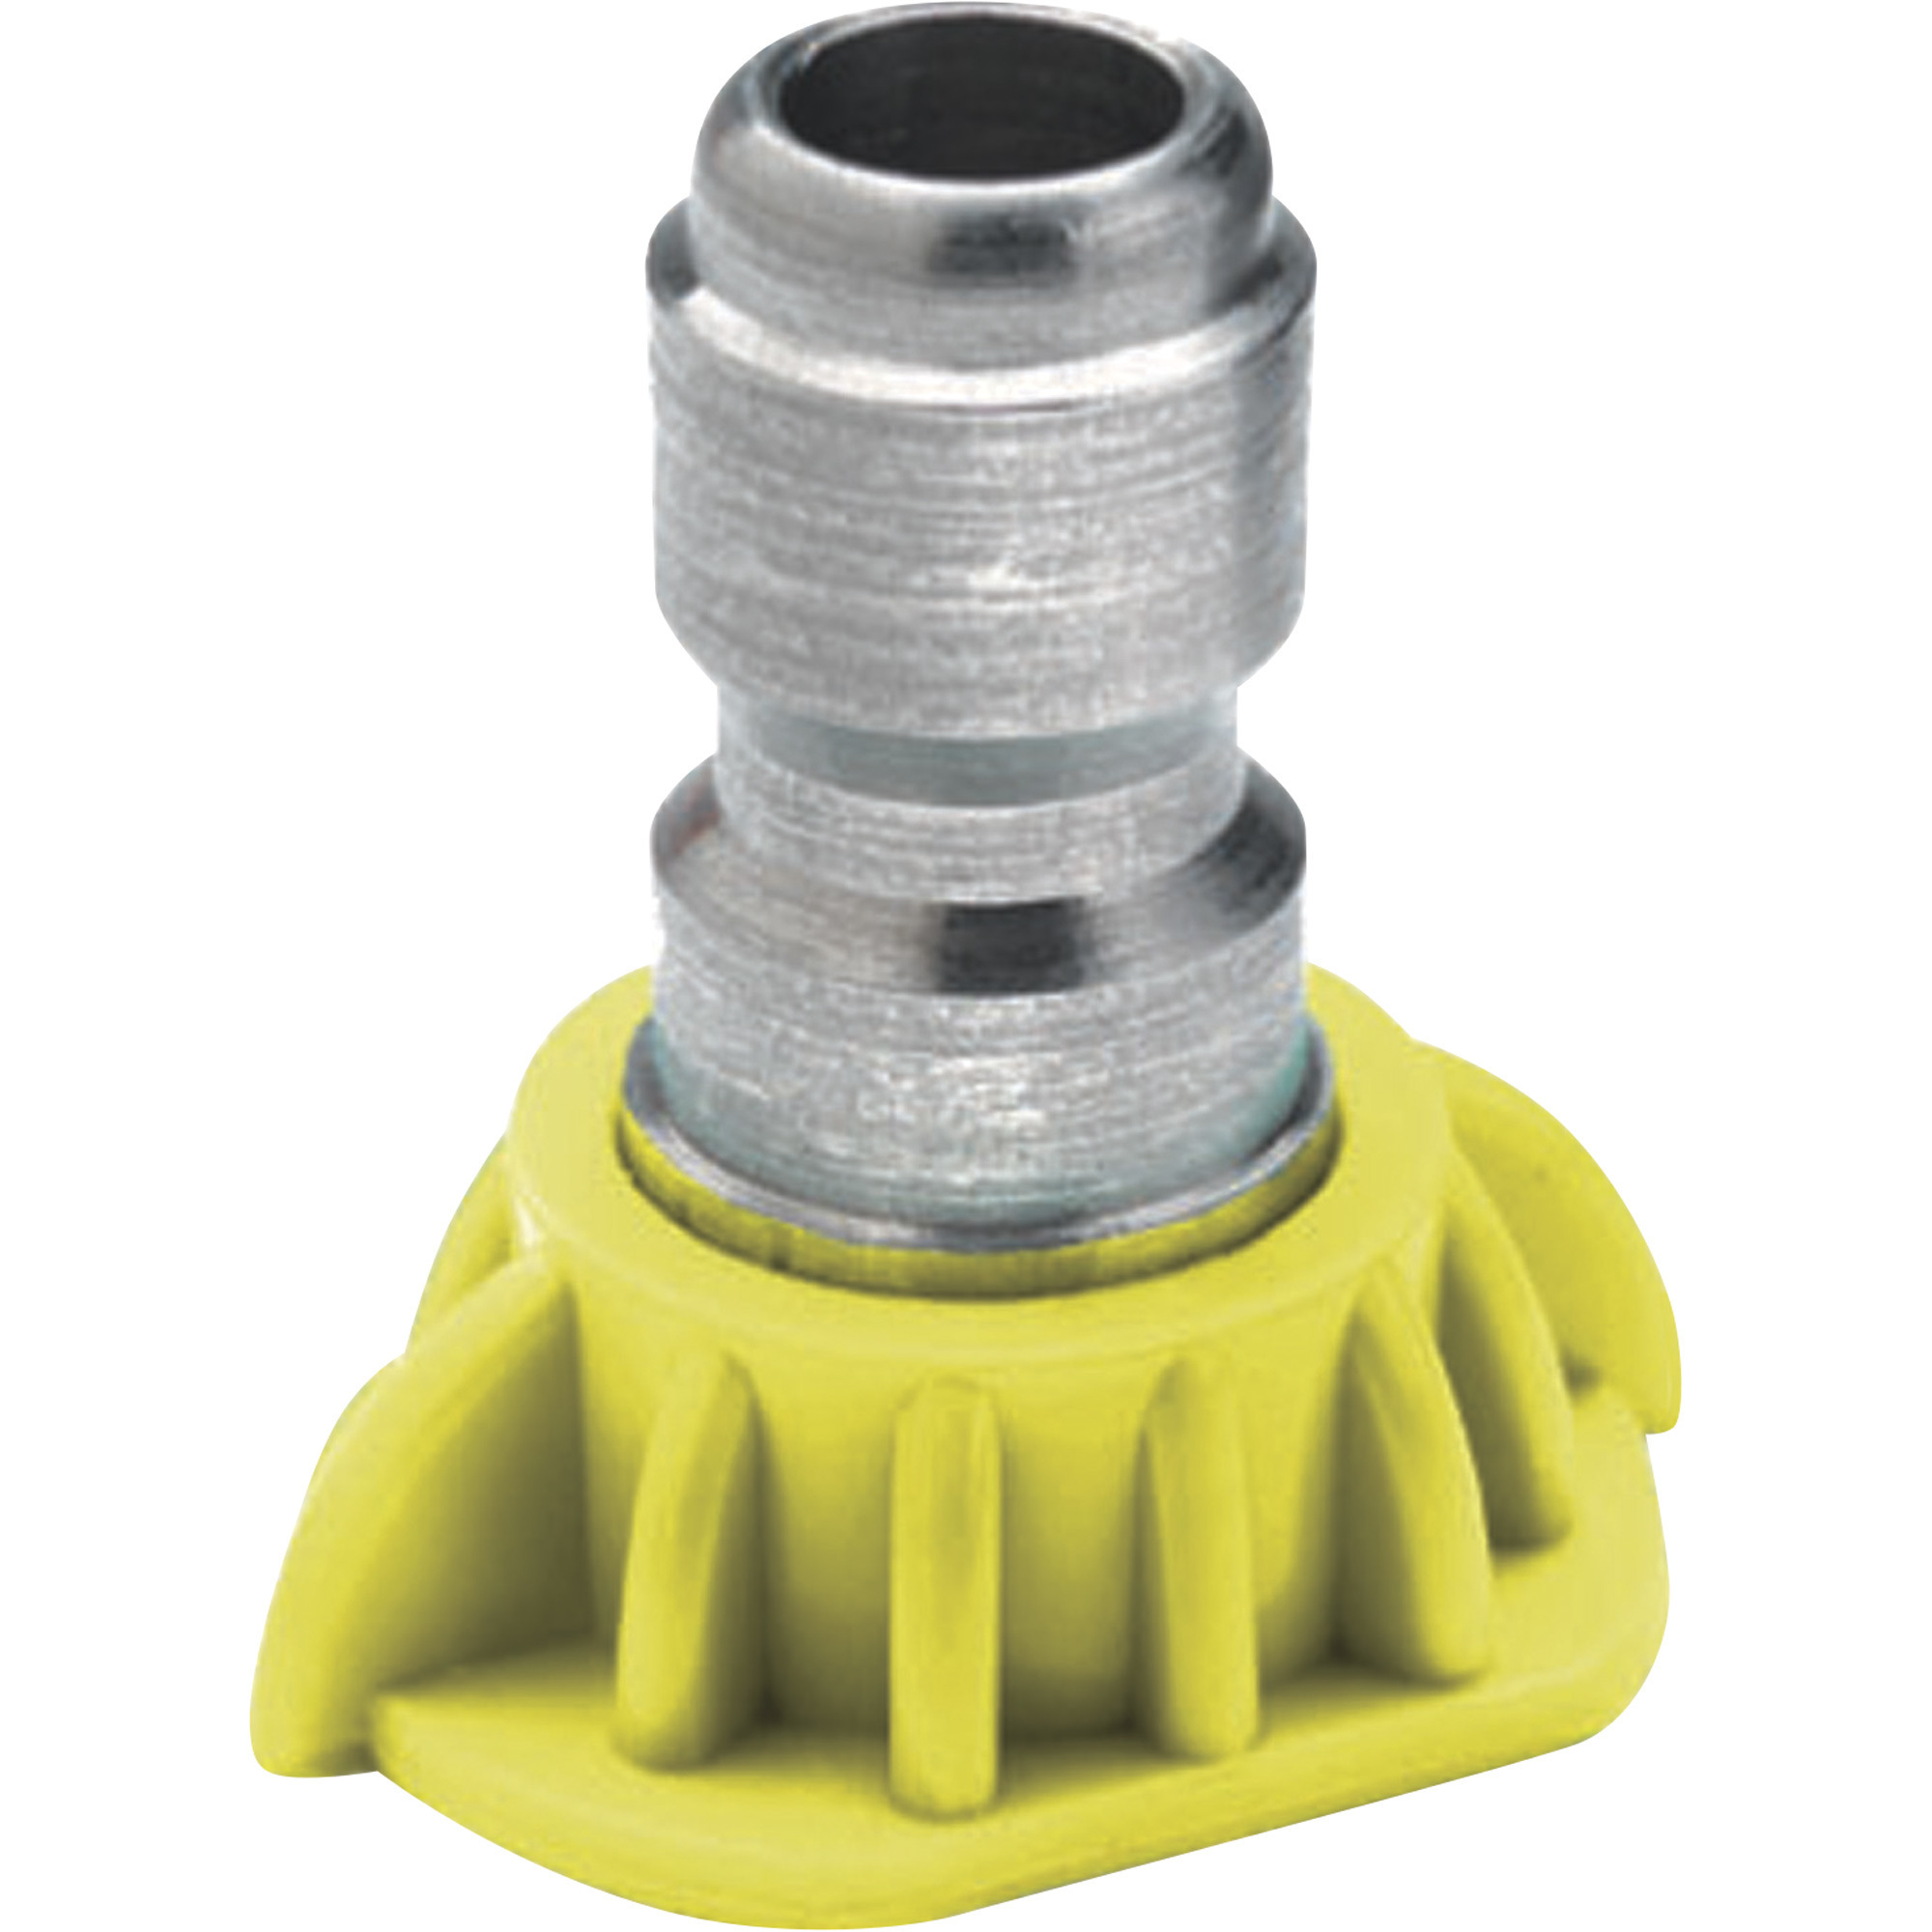 General Pump Pressure Washer Quick Couple Spray Nozzle â 2.5 Size, 15 Degree Spray, Model N15025QP